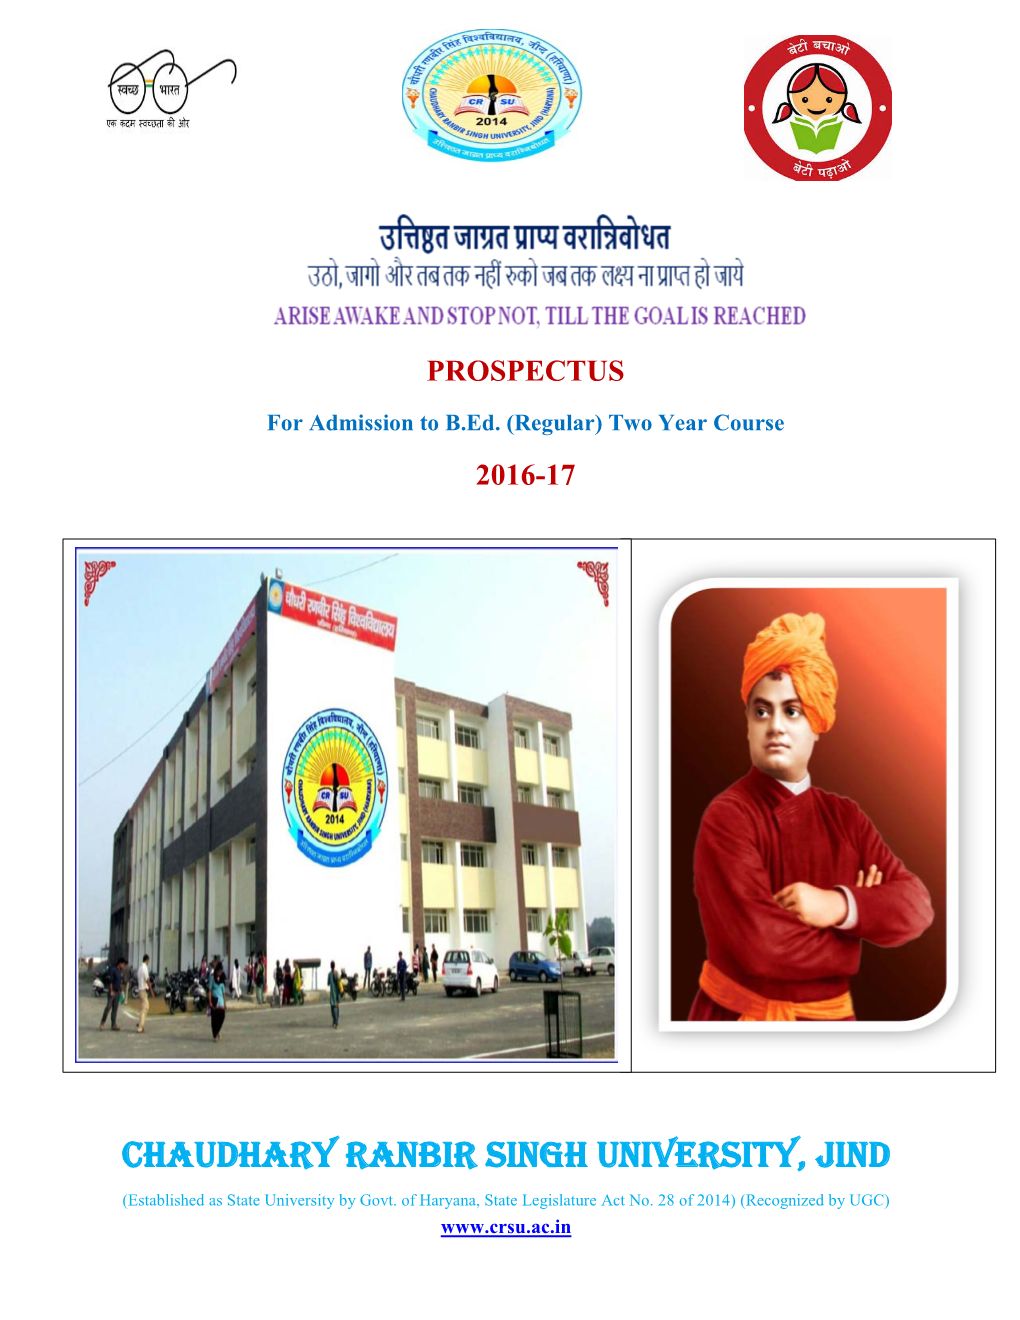 Chaudhary Ranbir Singh University, Jind